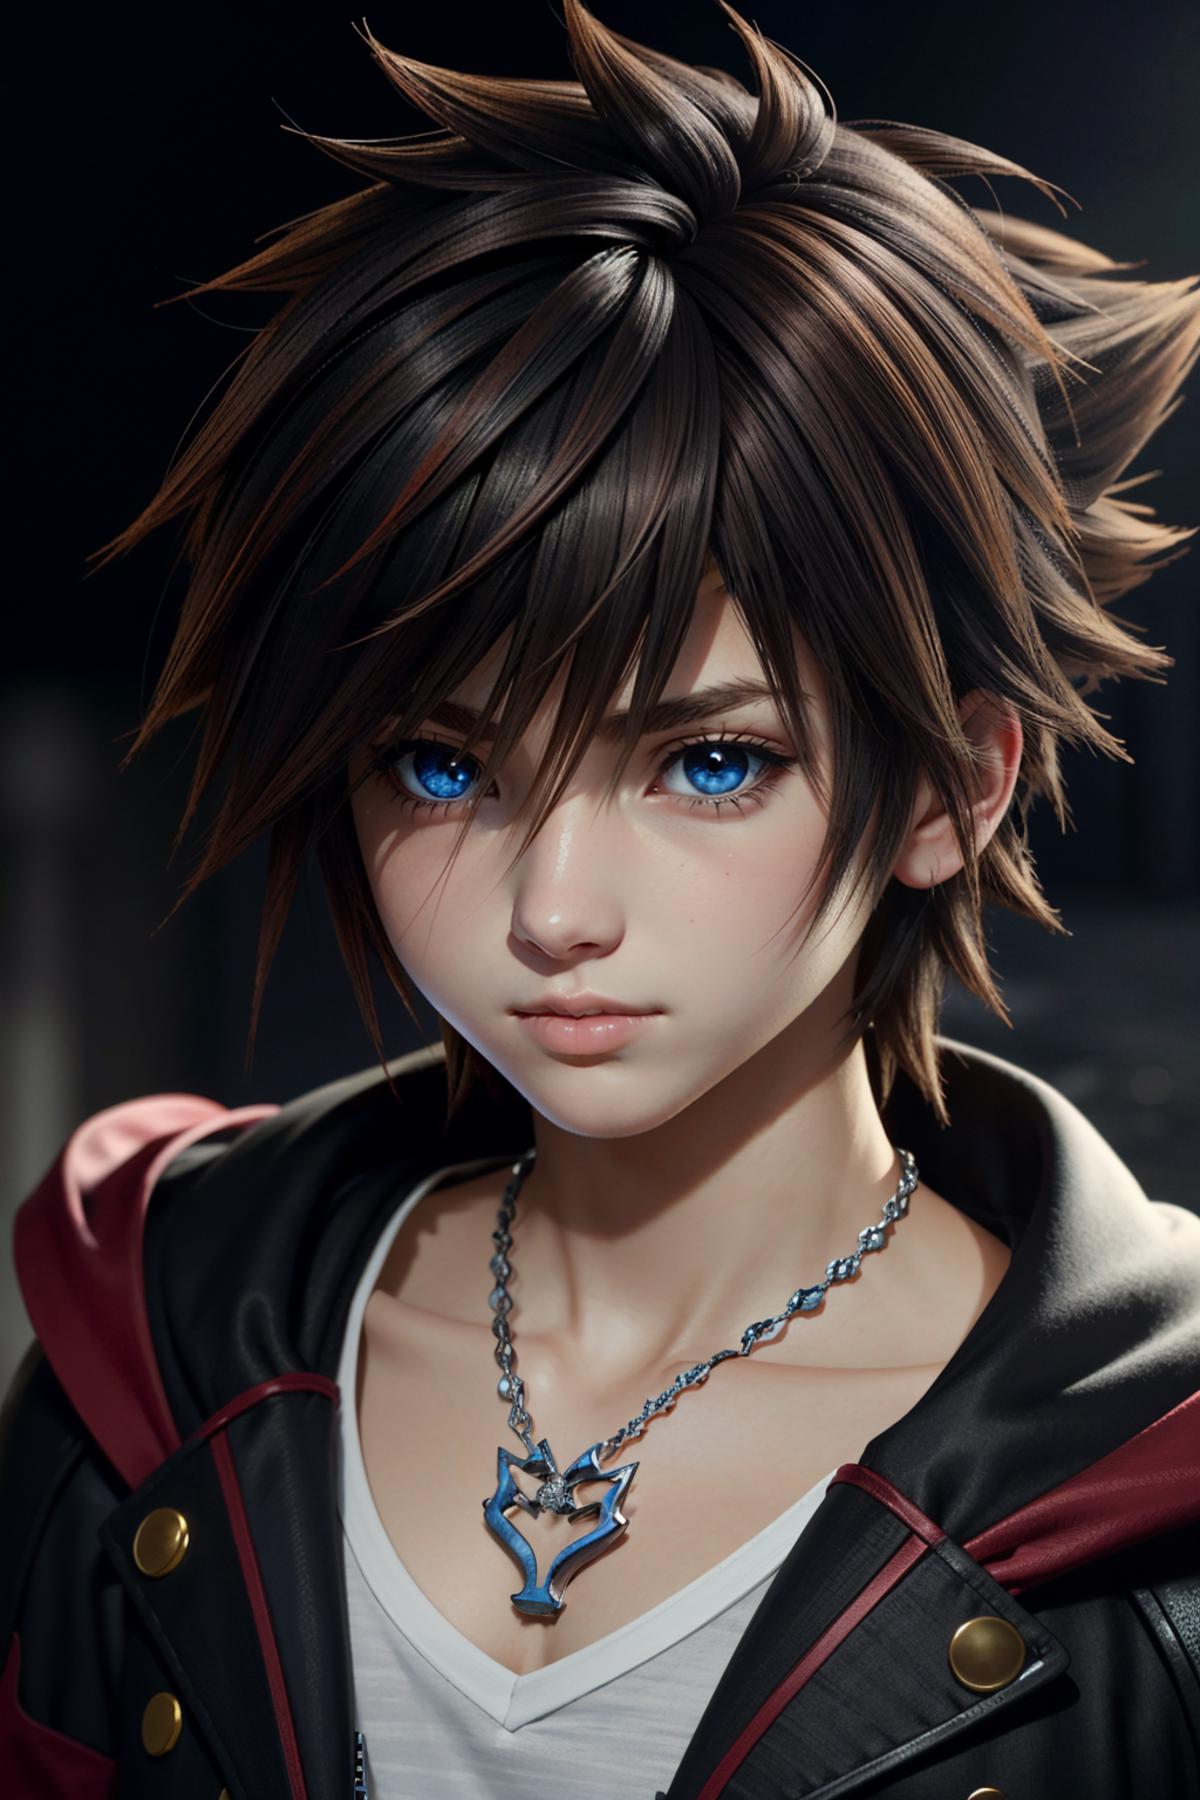 Sora from Kingdom Hearts image by BloodRedKittie